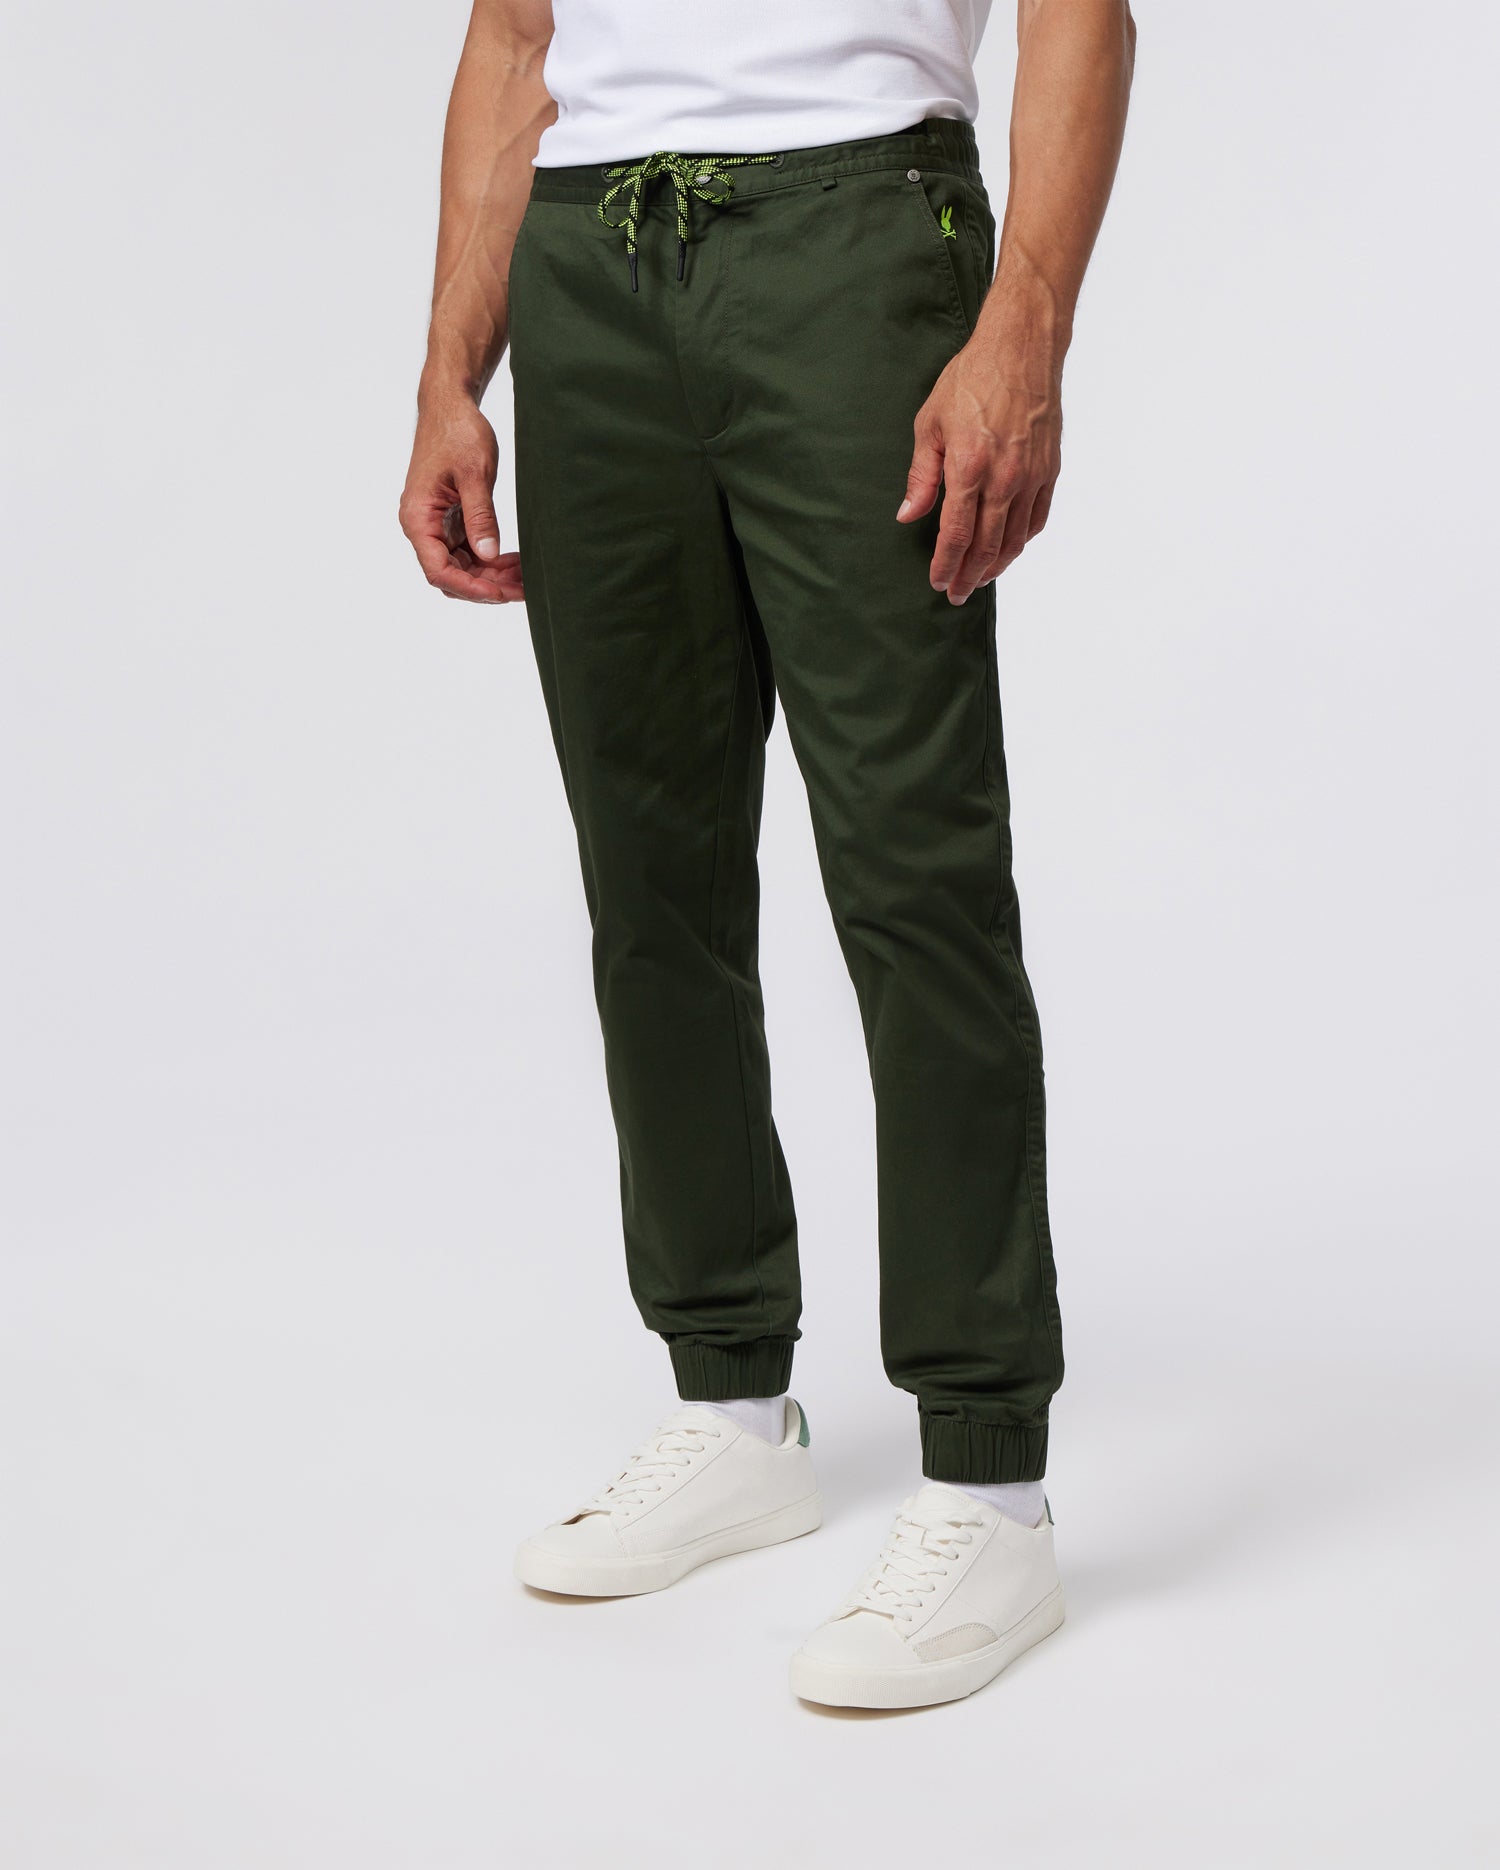 Men's sweatpants - green P948 | Ombre.com - Men's clothing online